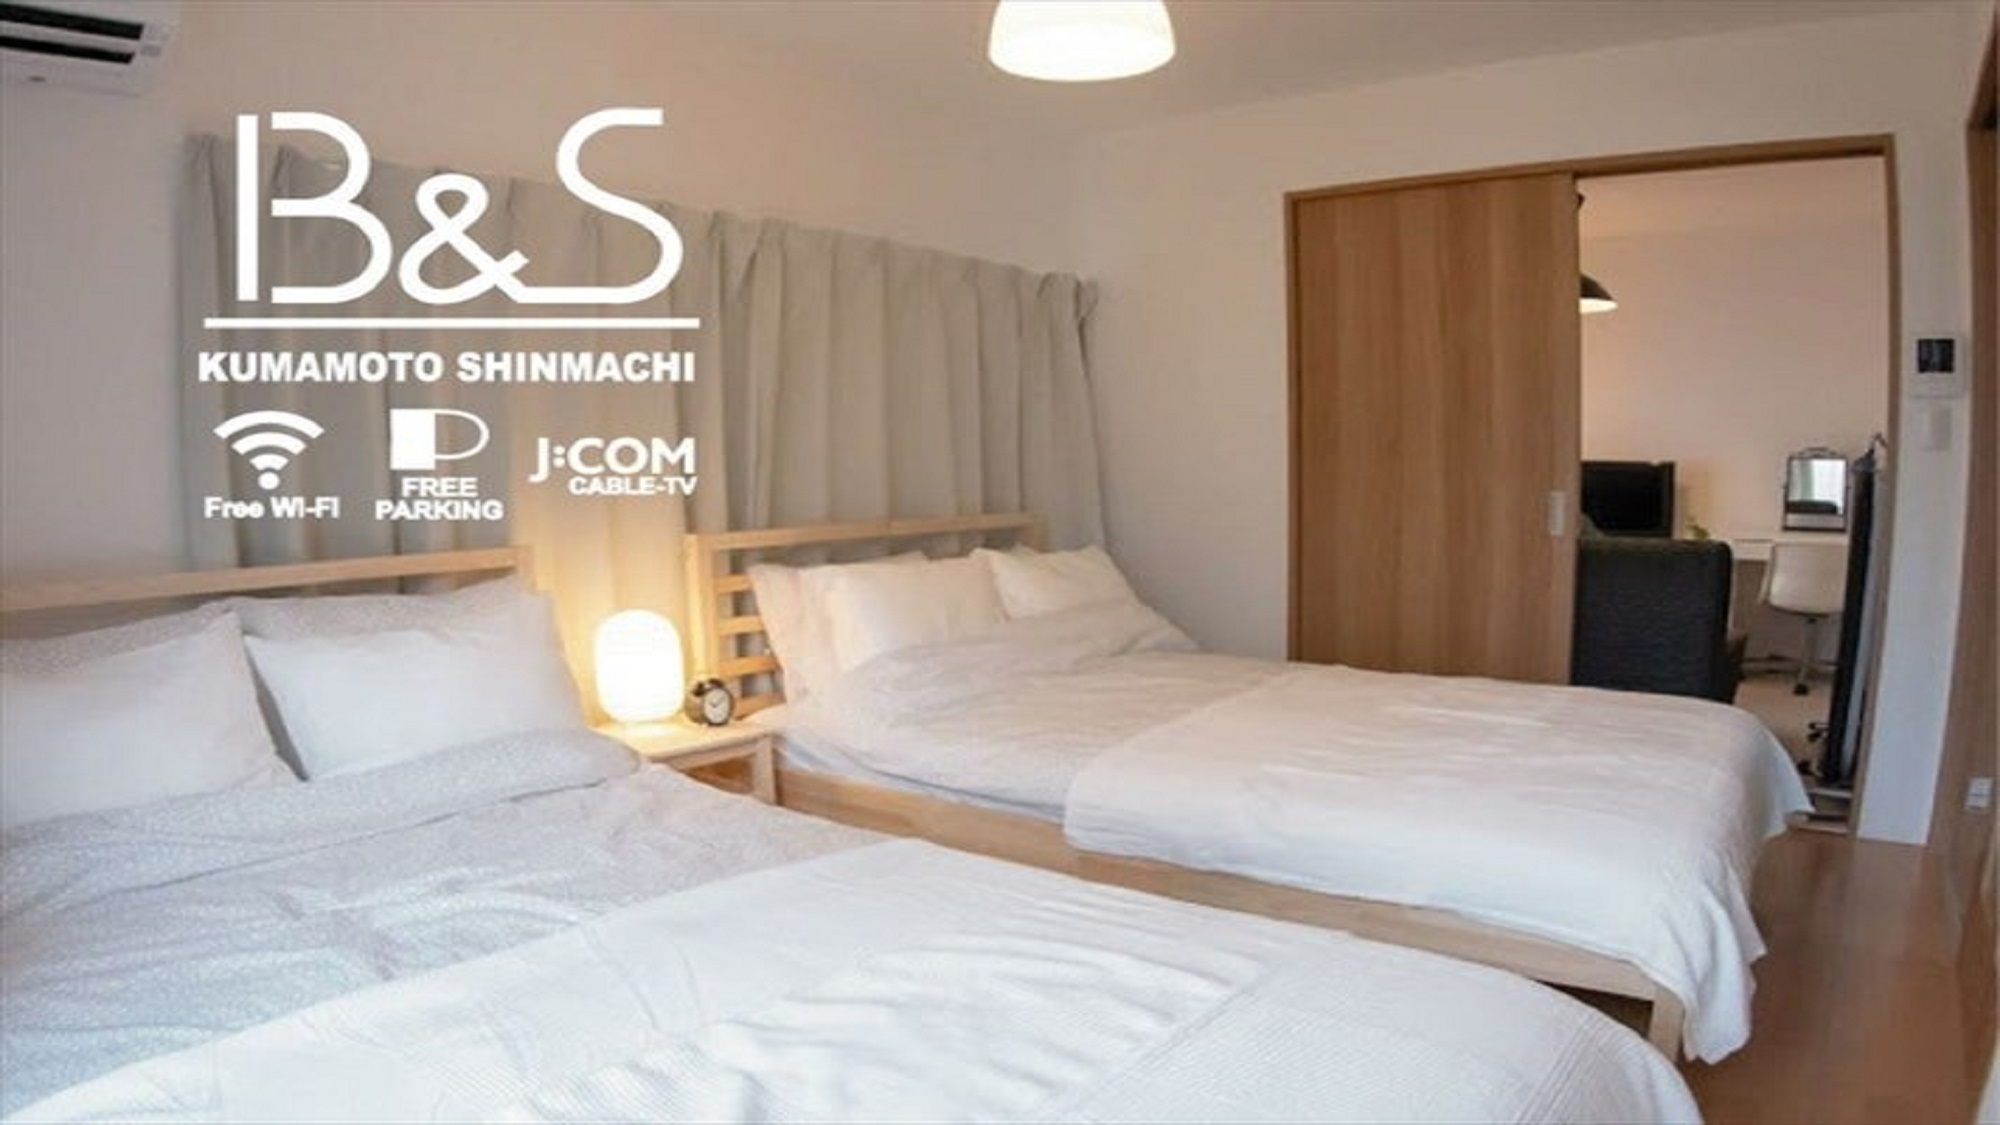 B&S Kumamoto shinmachi (1)【Vacation STAY提供】 image